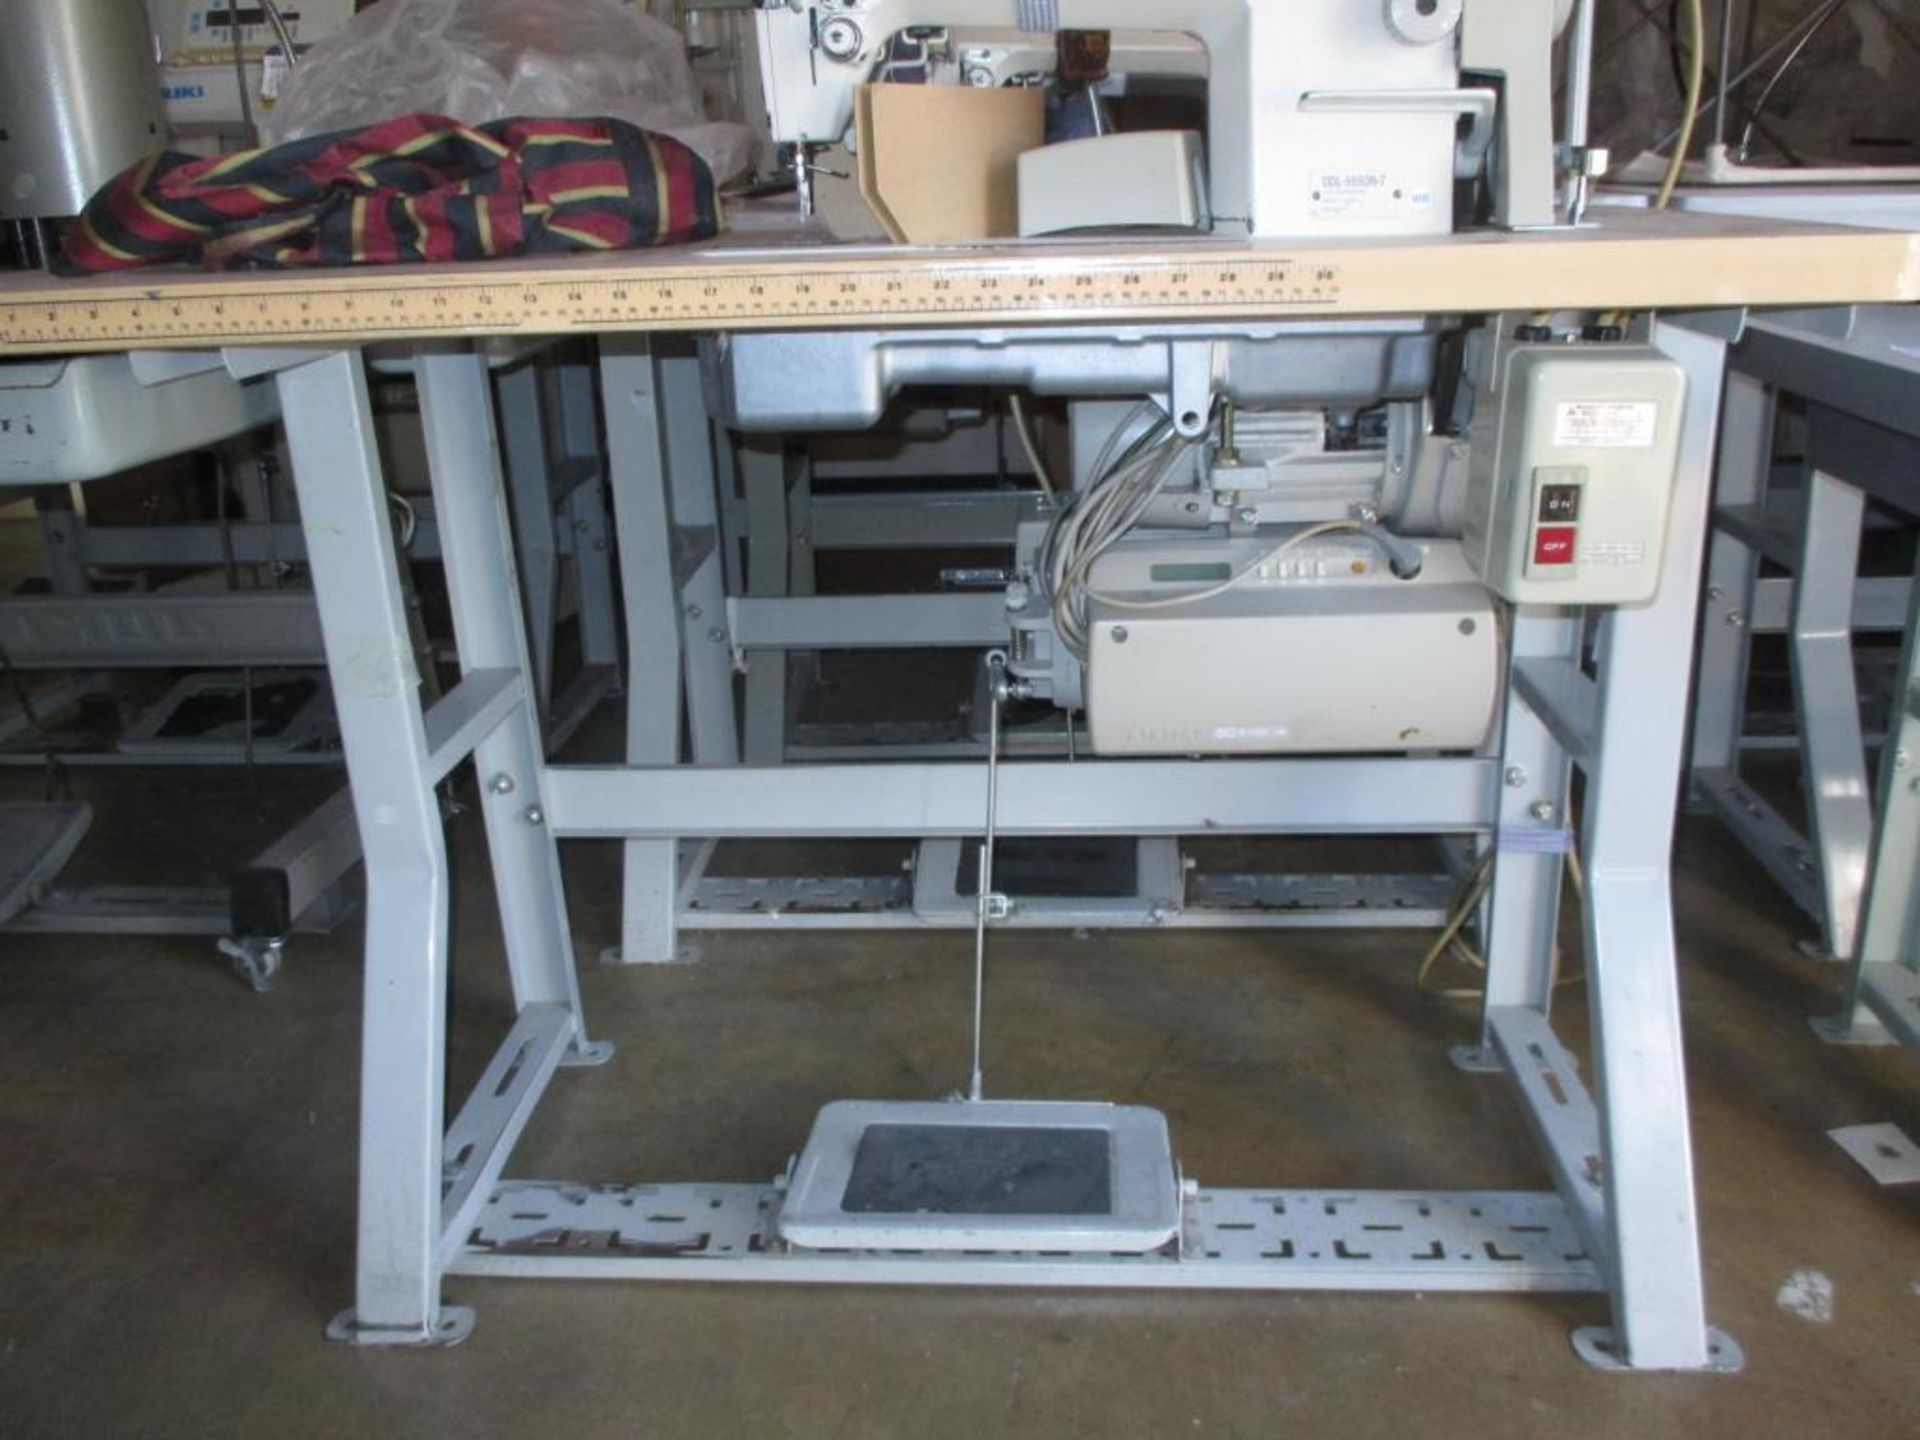 Lockstitch Reverse Industrial Sewing Machine. Juki DDL-5550N-7 1-Needle Lockstitch Reverse - Image 5 of 7